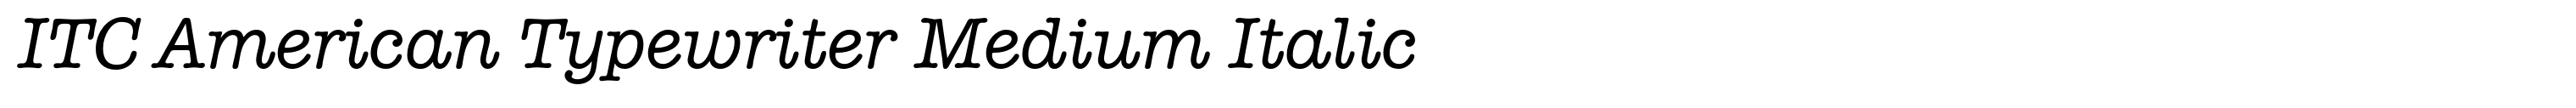 ITC American Typewriter Medium Italic